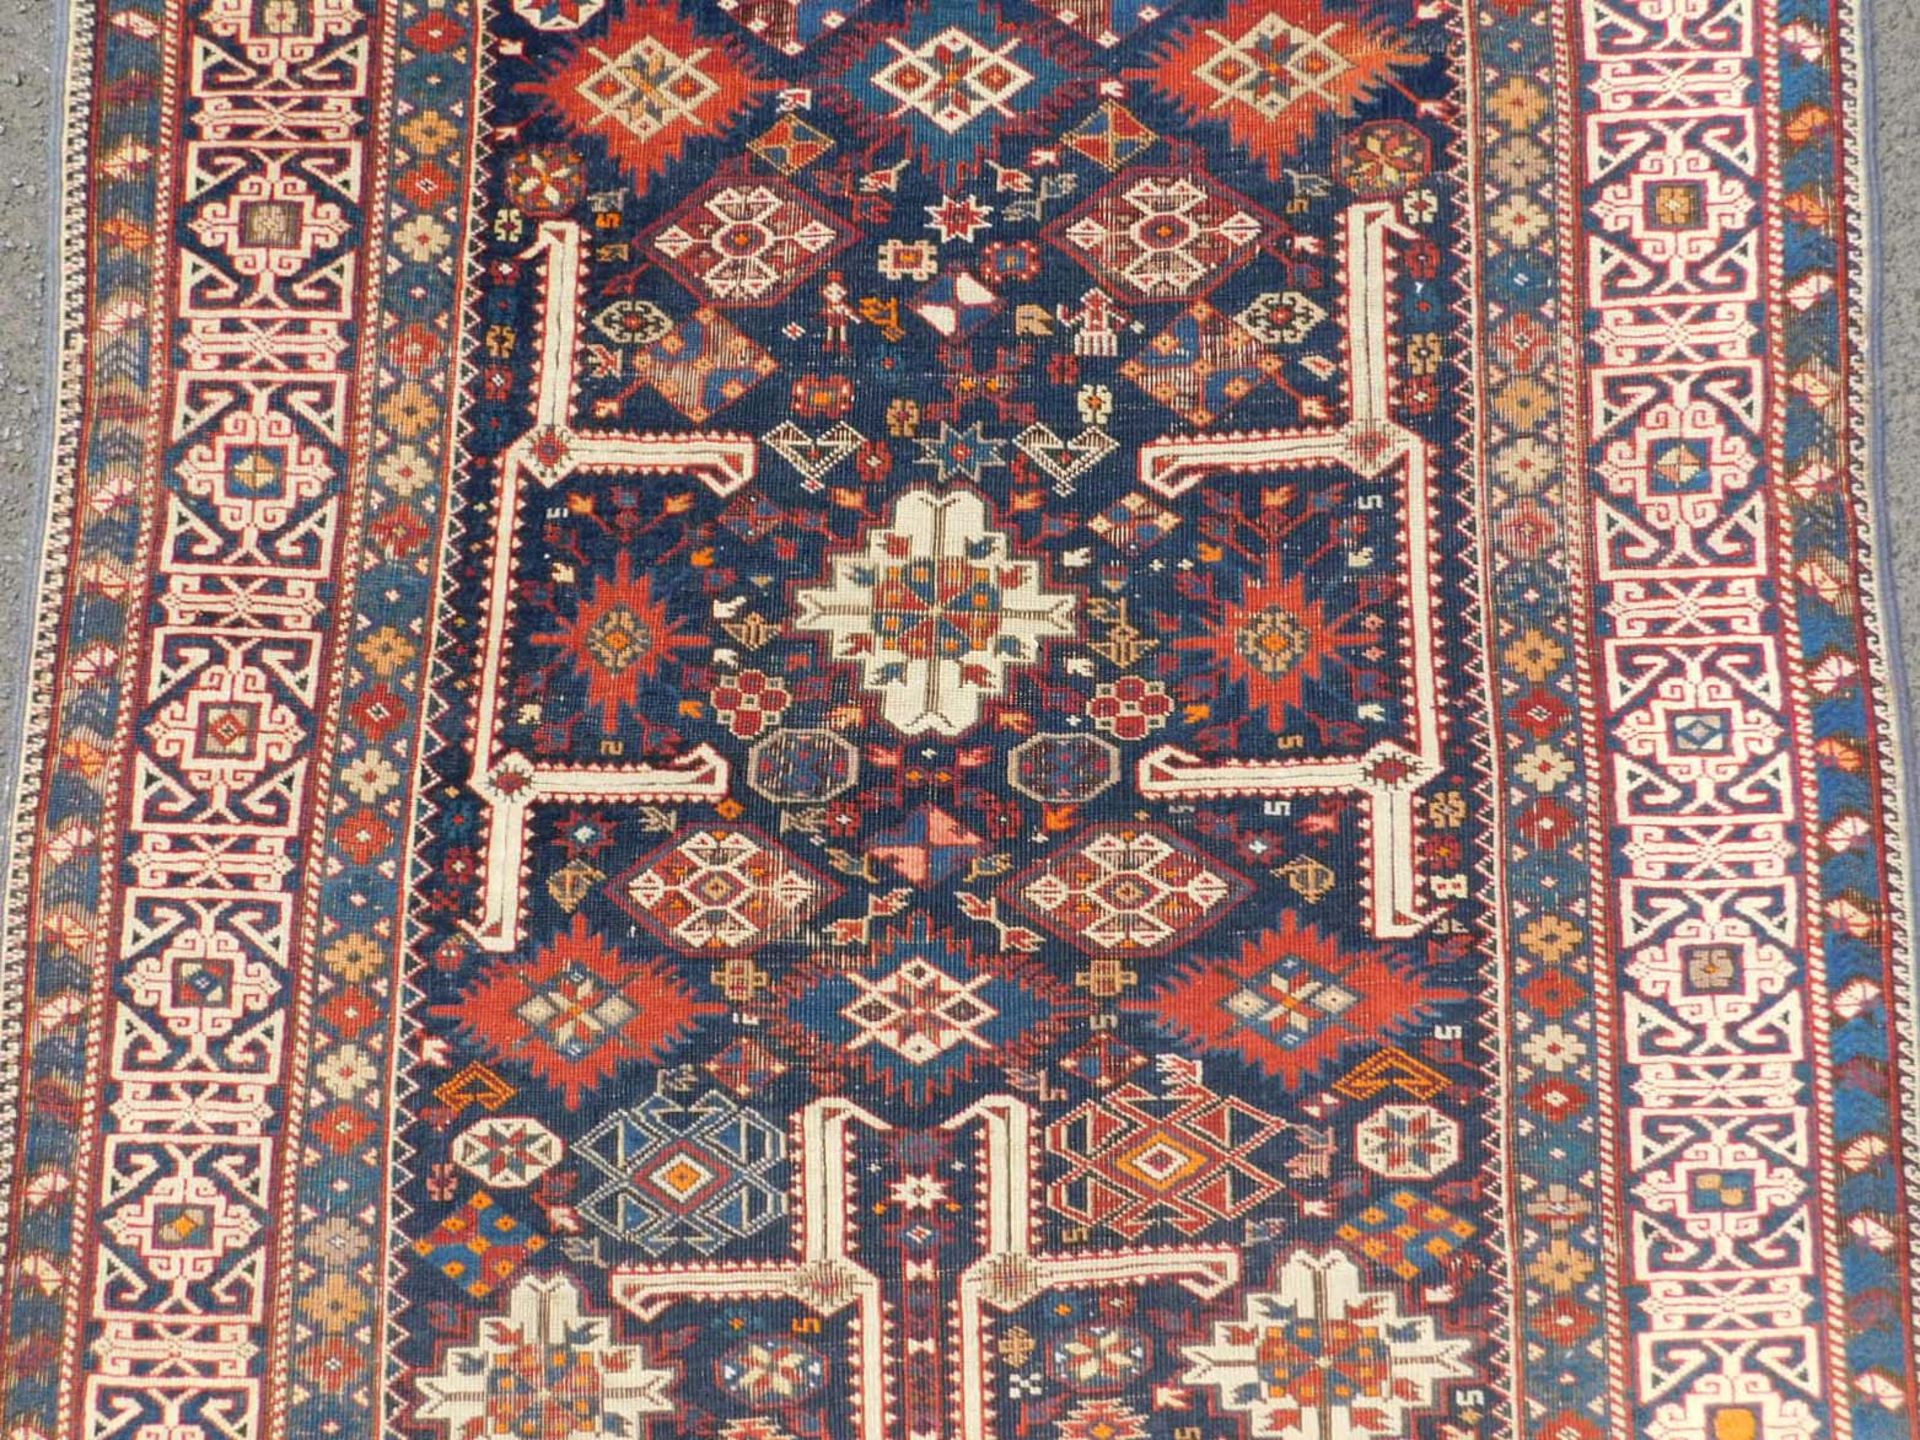 Blattgabel Kuba. Schirwan. Teppich. Kaukasus antik. - Bild 3 aus 7